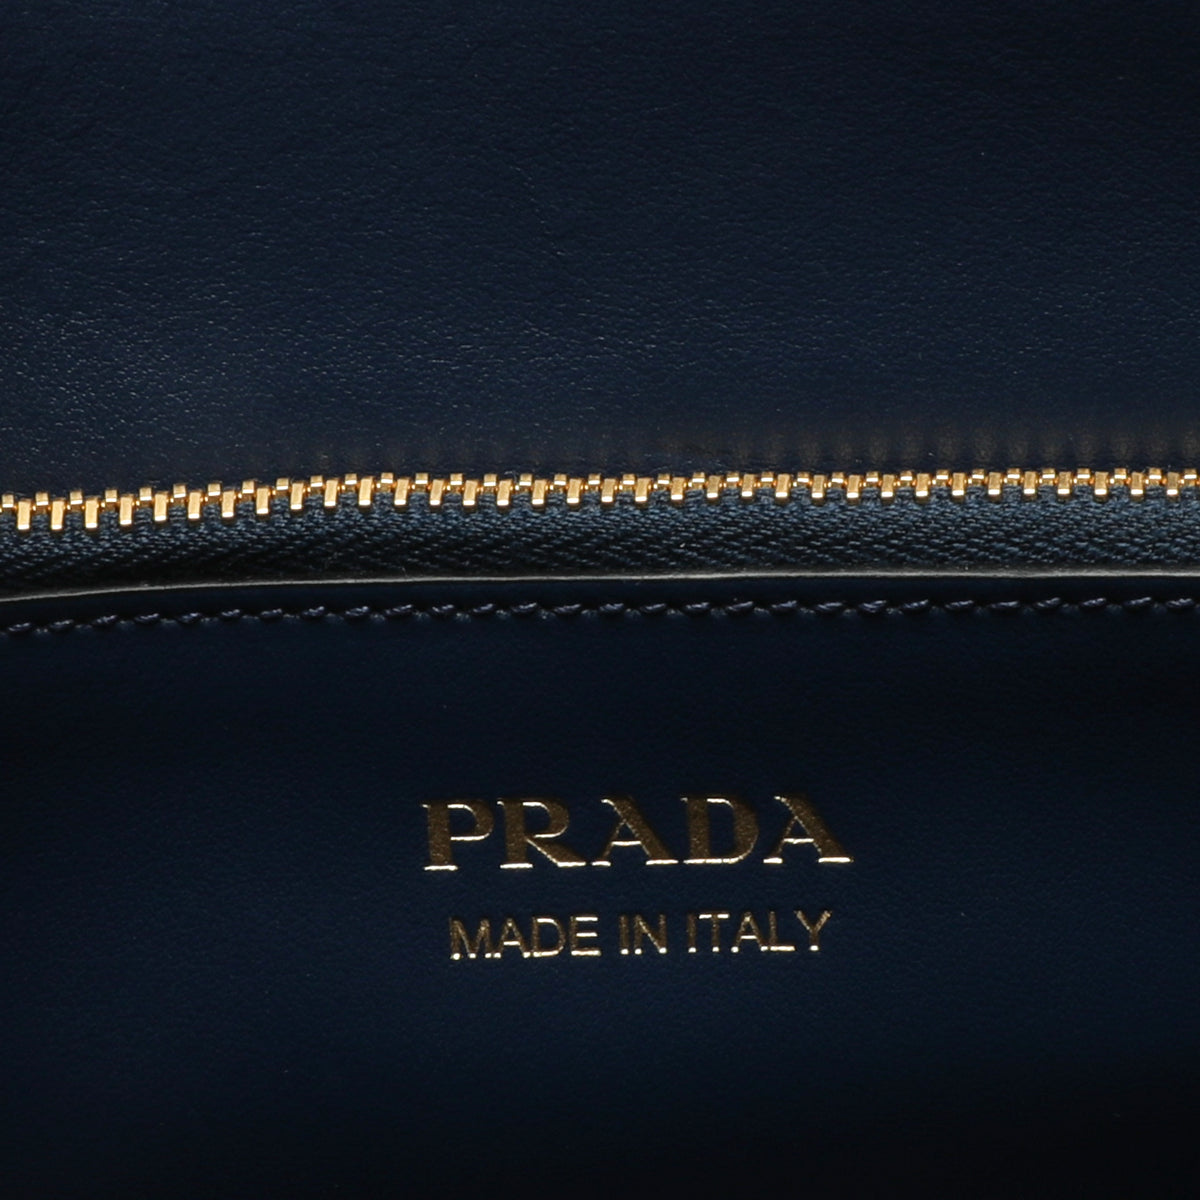 Prada Bluette Saffiano Leather Medium Monochrome Bag by WP